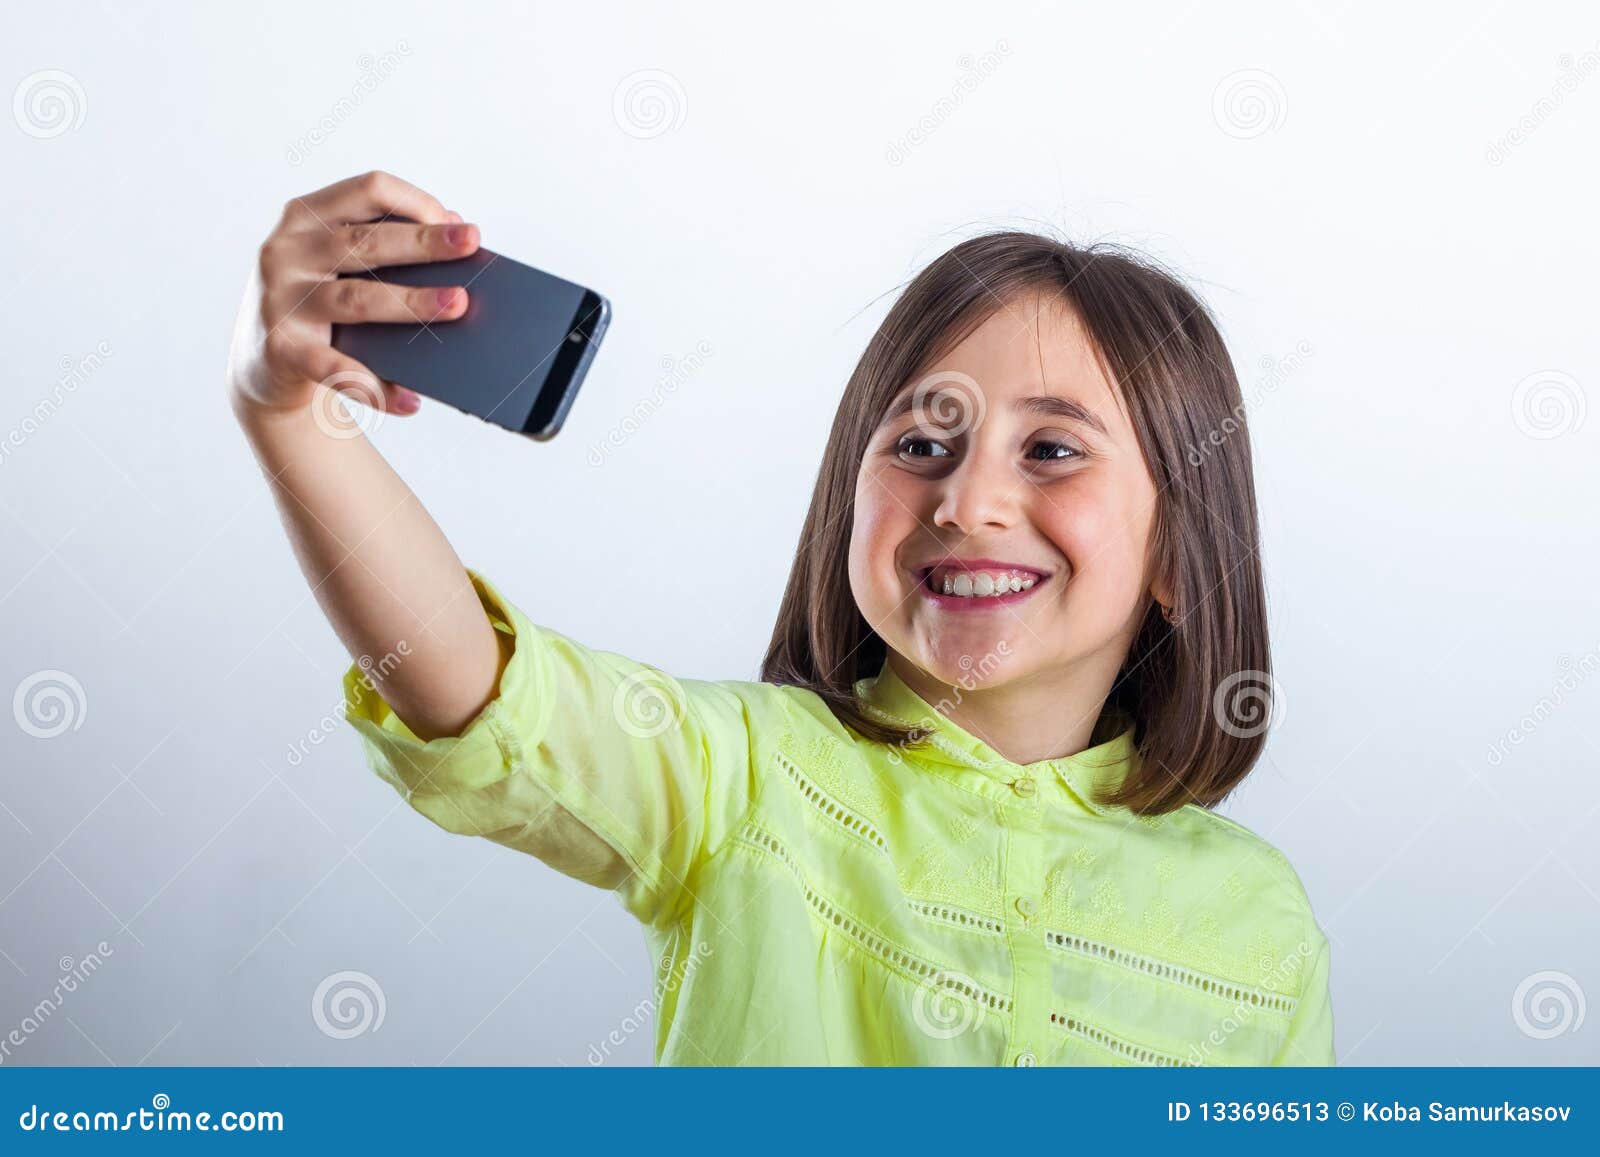 Pretty Teenage Girl with Mobile Phone in Studio. Selfie Stock Image ...